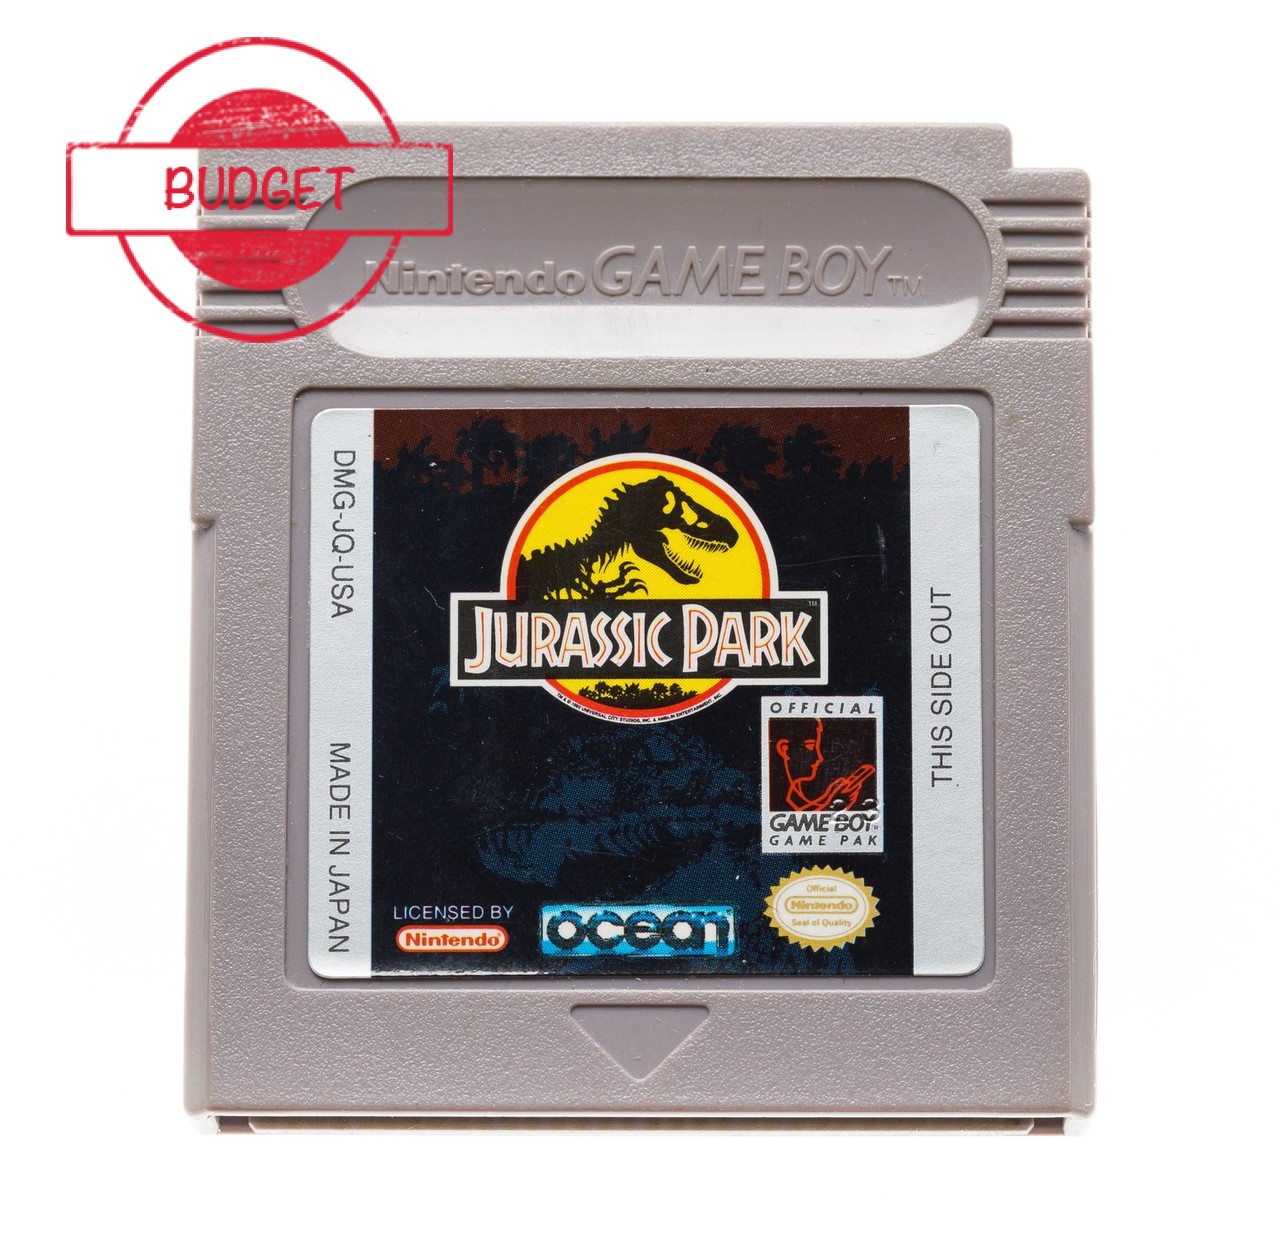 Jurassic Park - Budget - Gameboy Classic Games